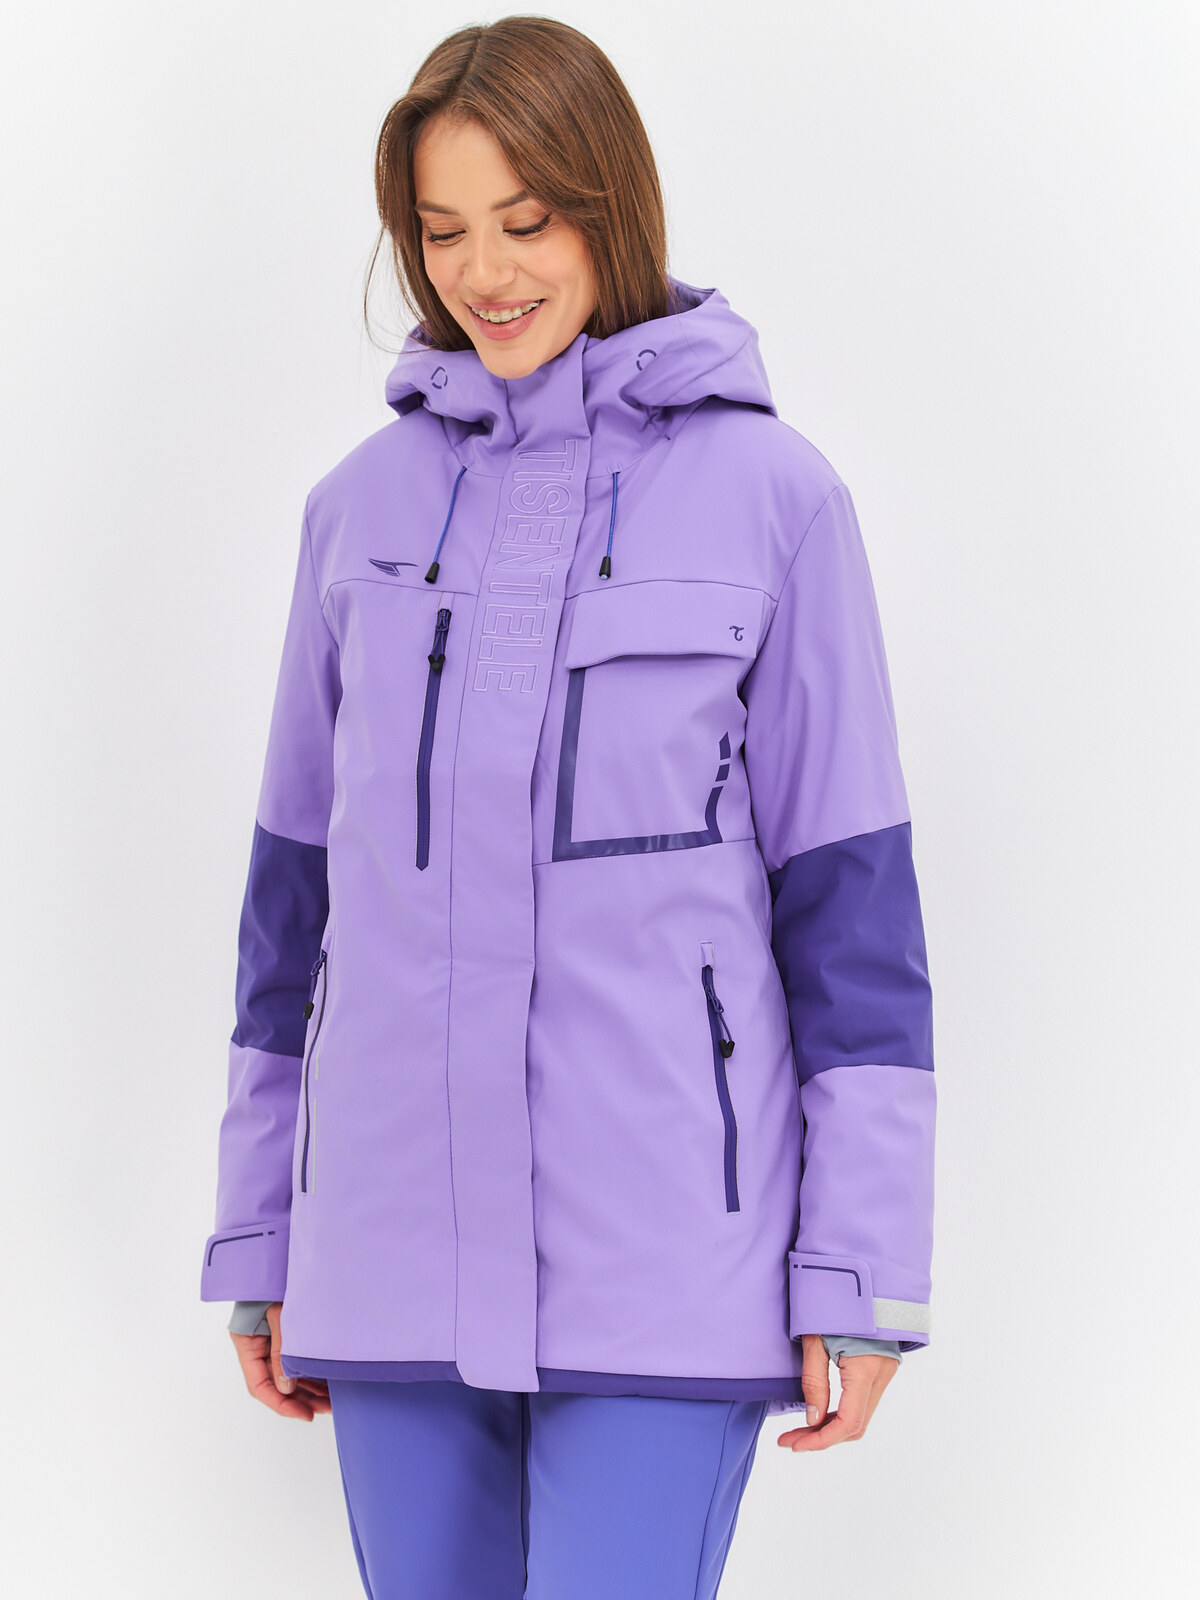 Куртка Tisentele Фиолетовый, 847679 (50, xxl)